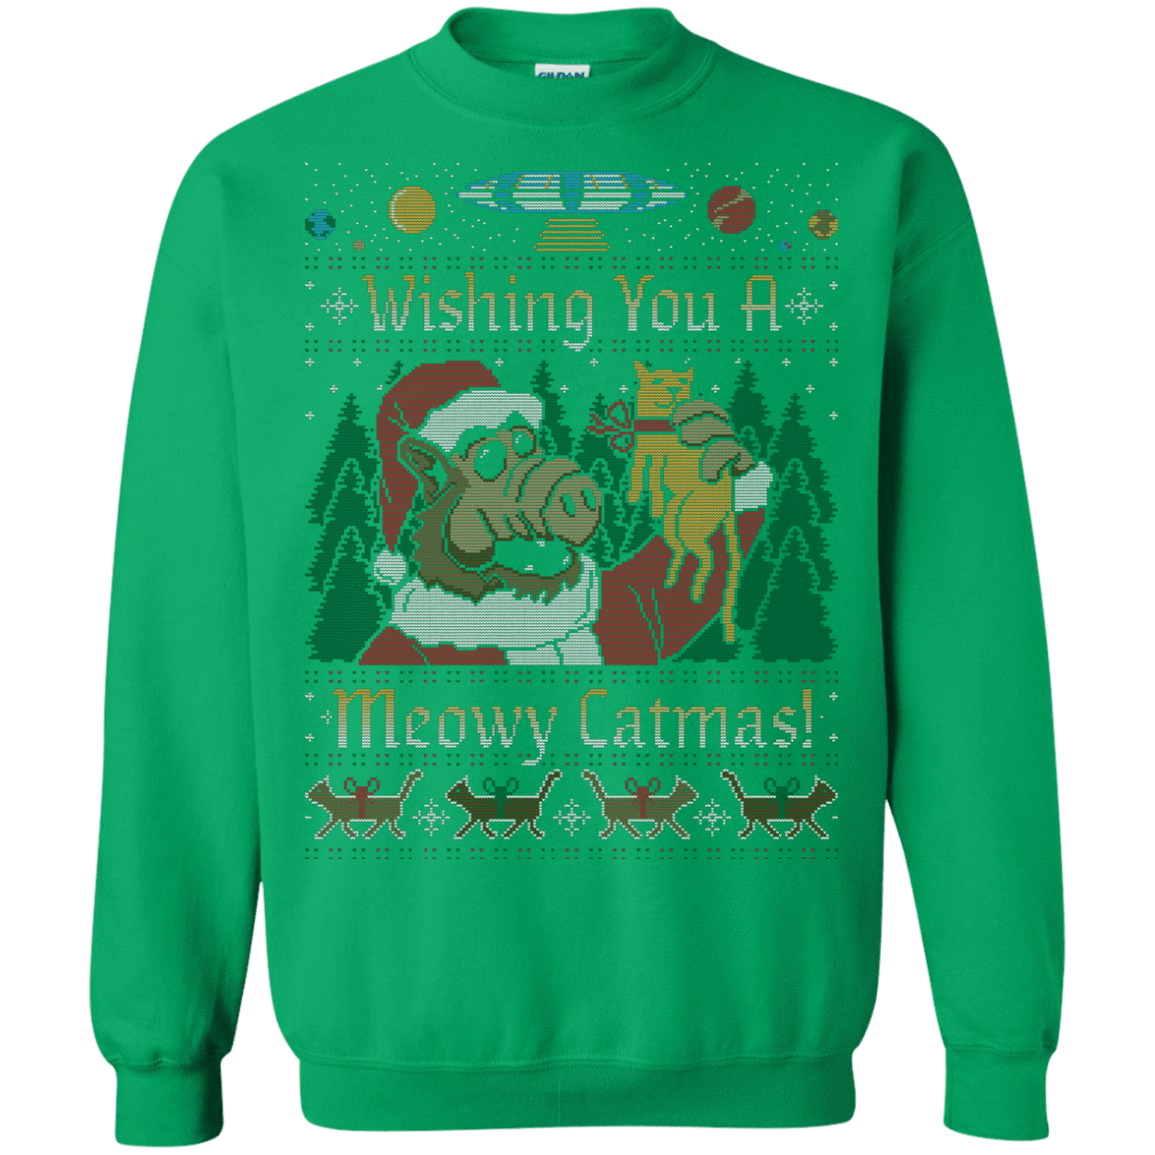 Sweatshirts Irish Green / Small ALF SWEATER Crewneck Sweatshirt